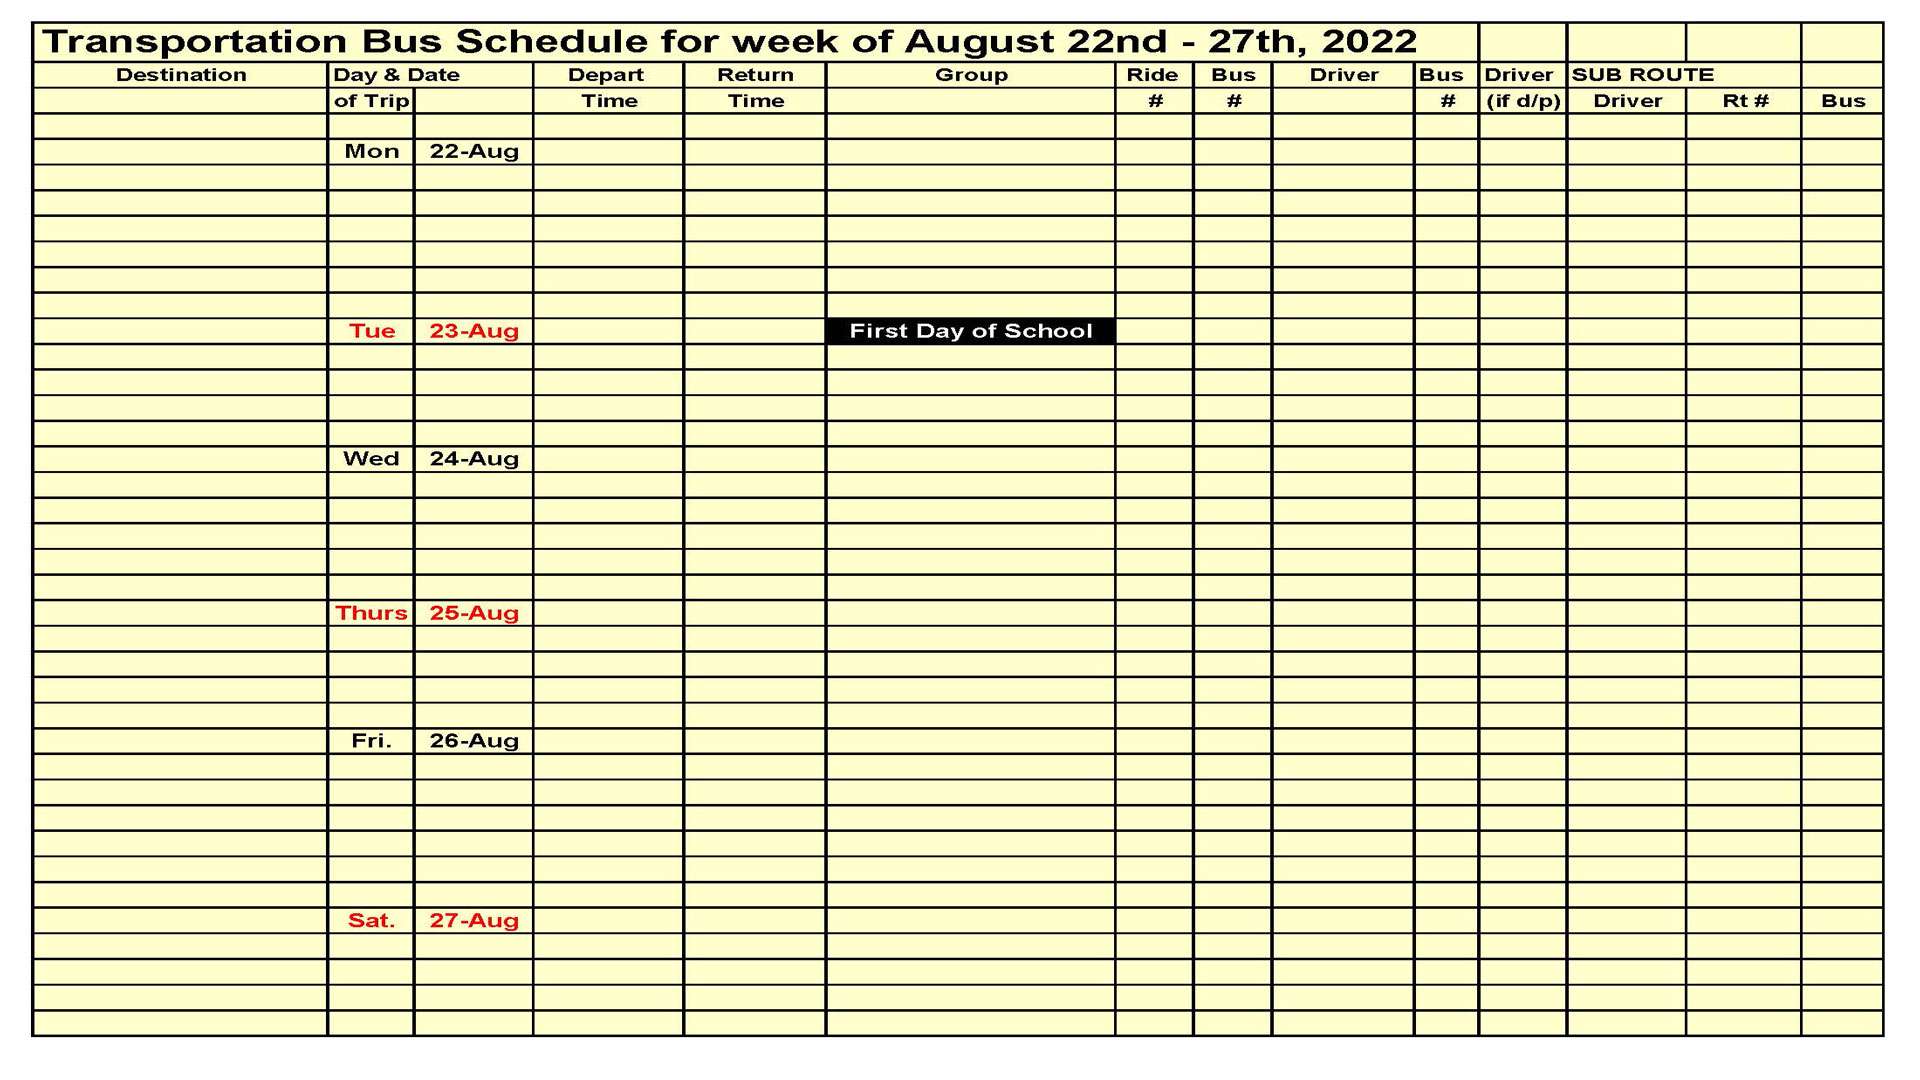 Transportation New Week Schedule